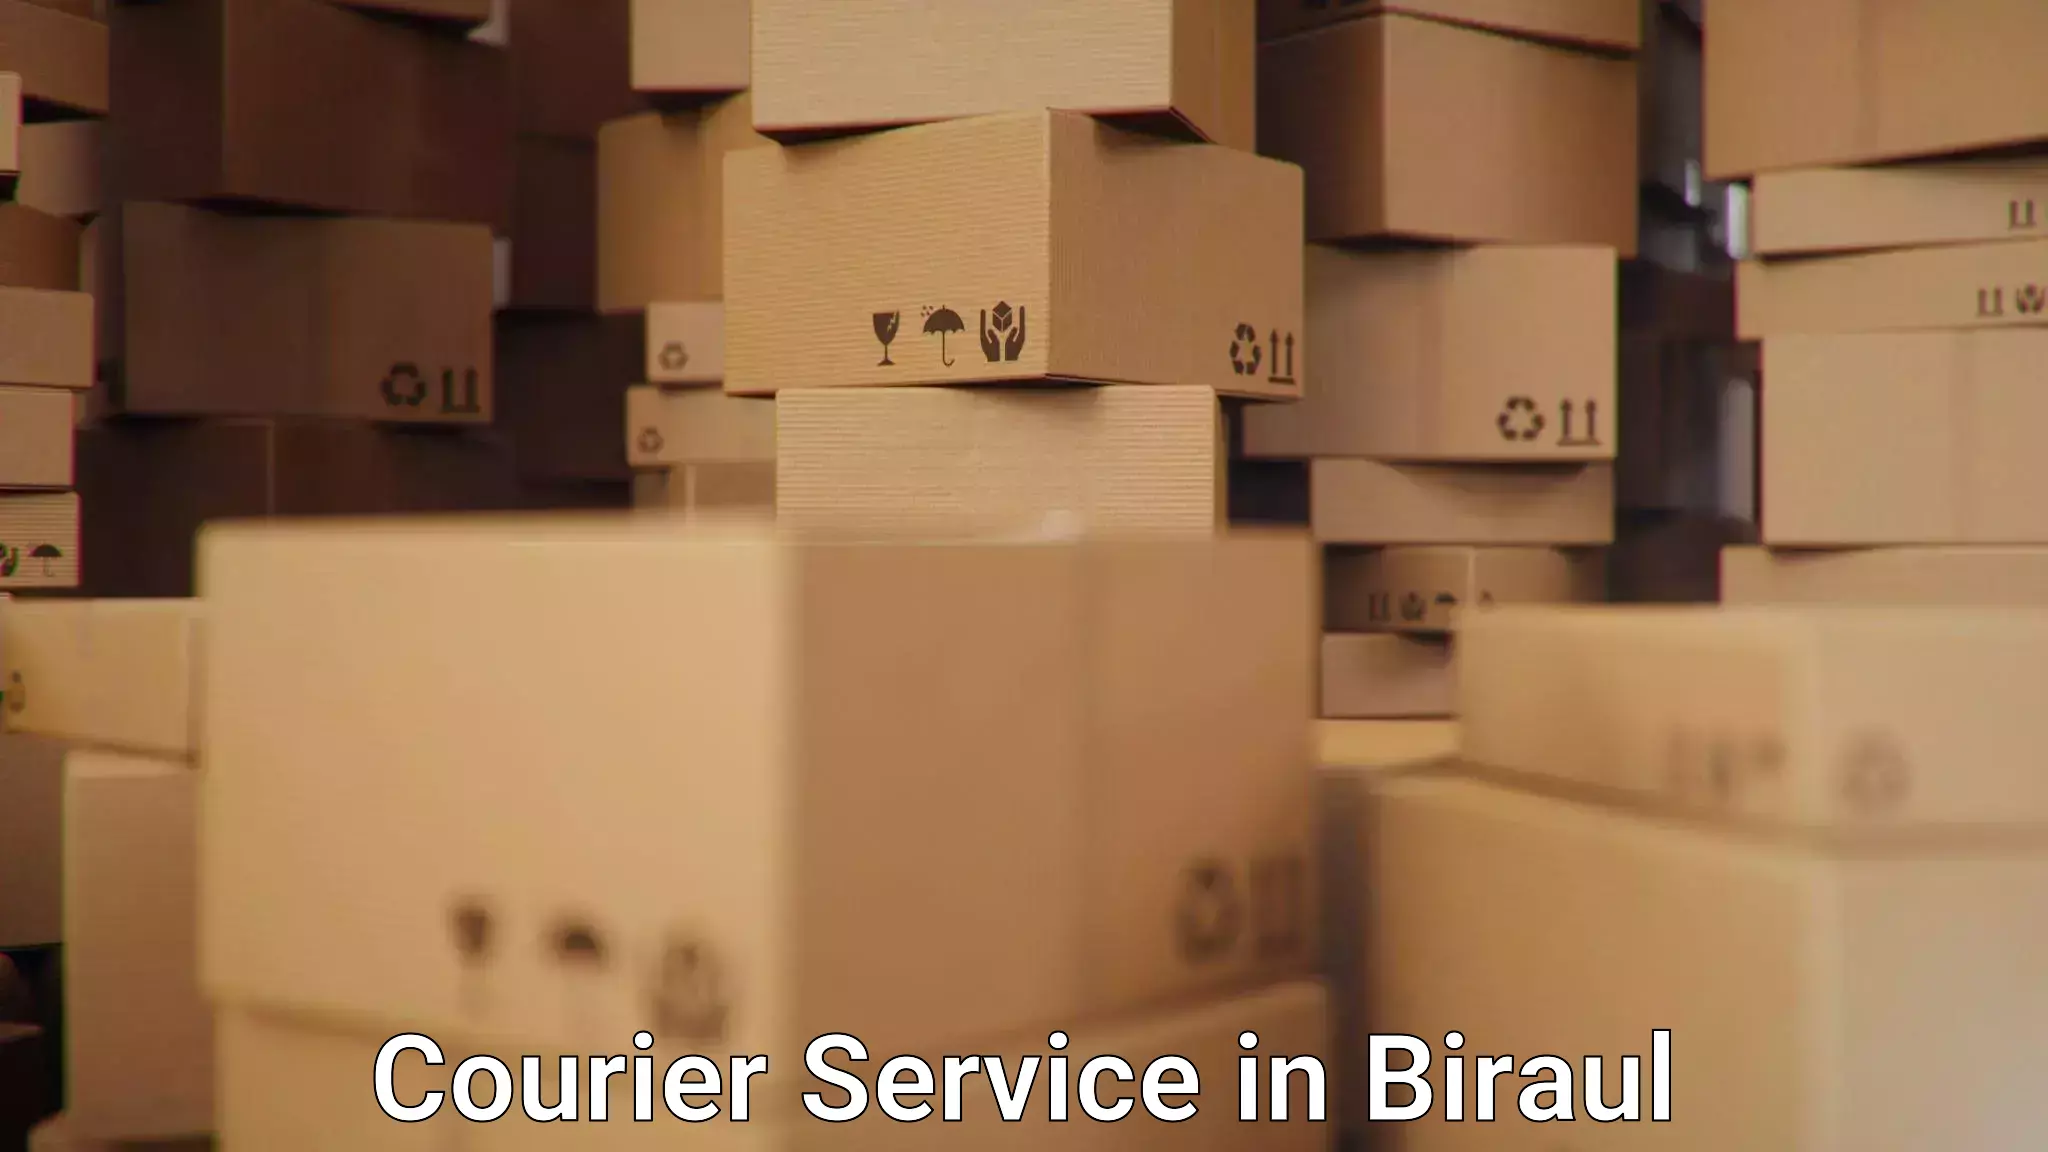 Secure packaging in Biraul